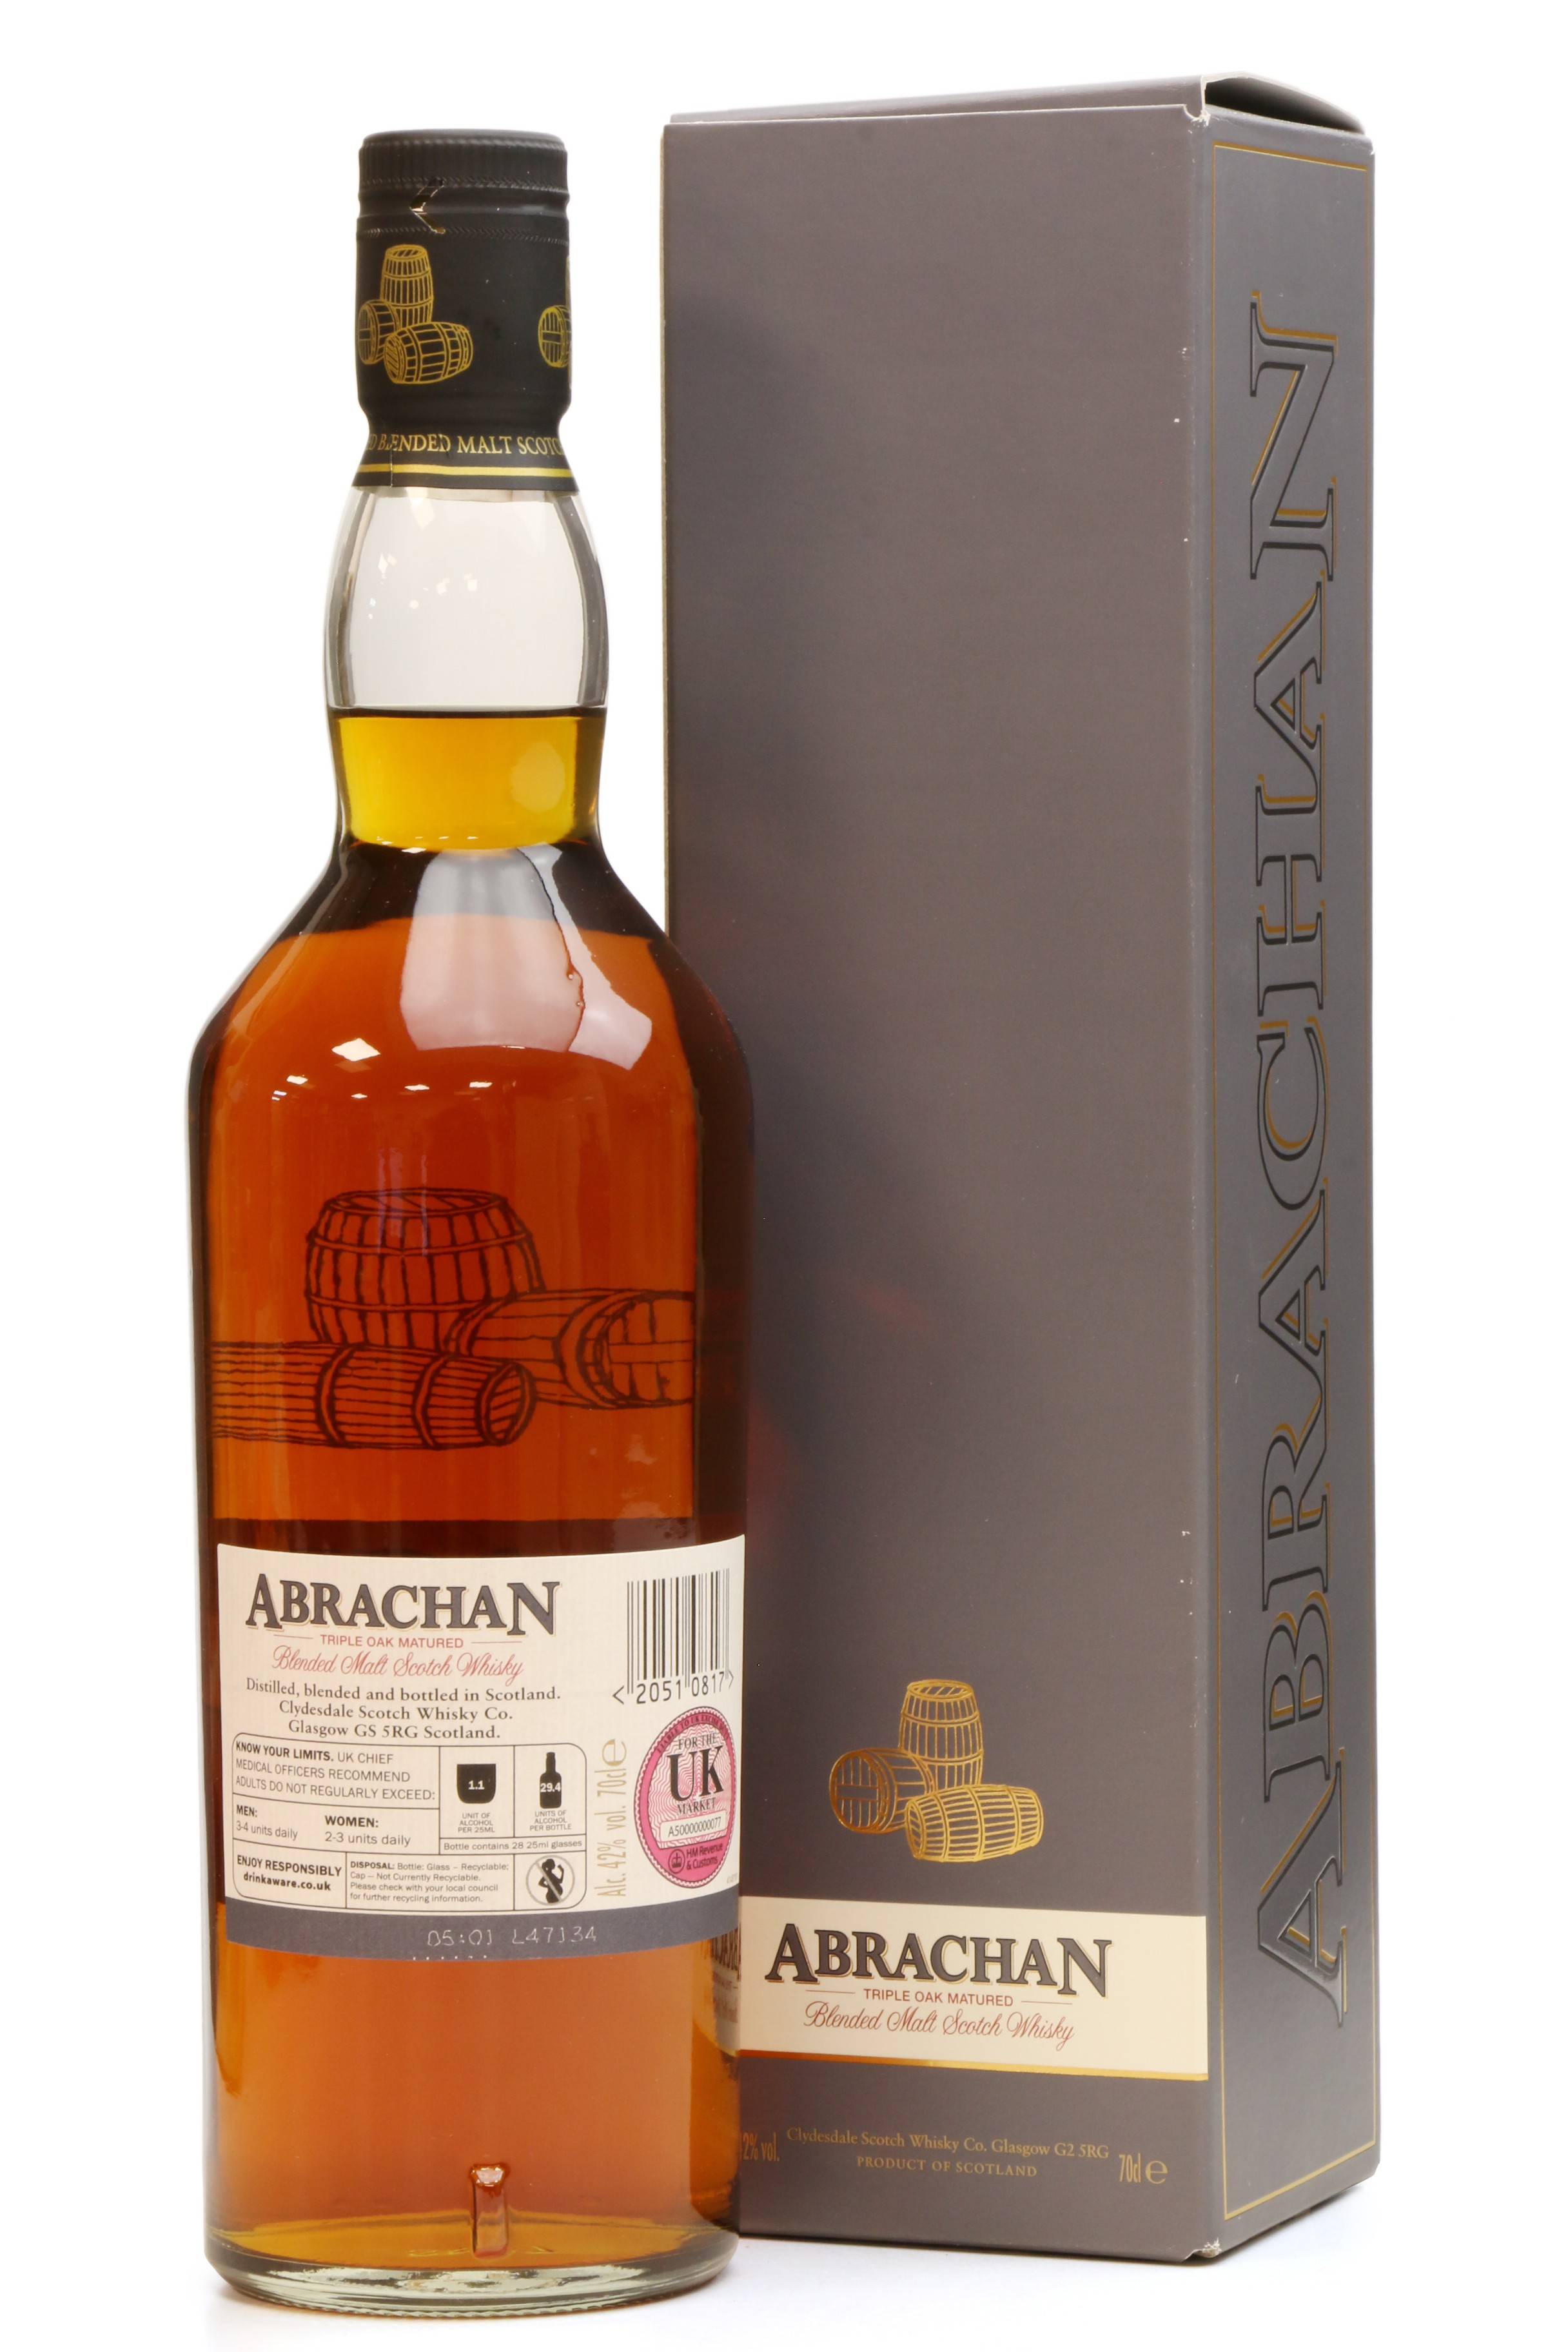 Abrachan Triple Oak Matured Blended Malt Scotch Whisky - Just Whisky  Auctions